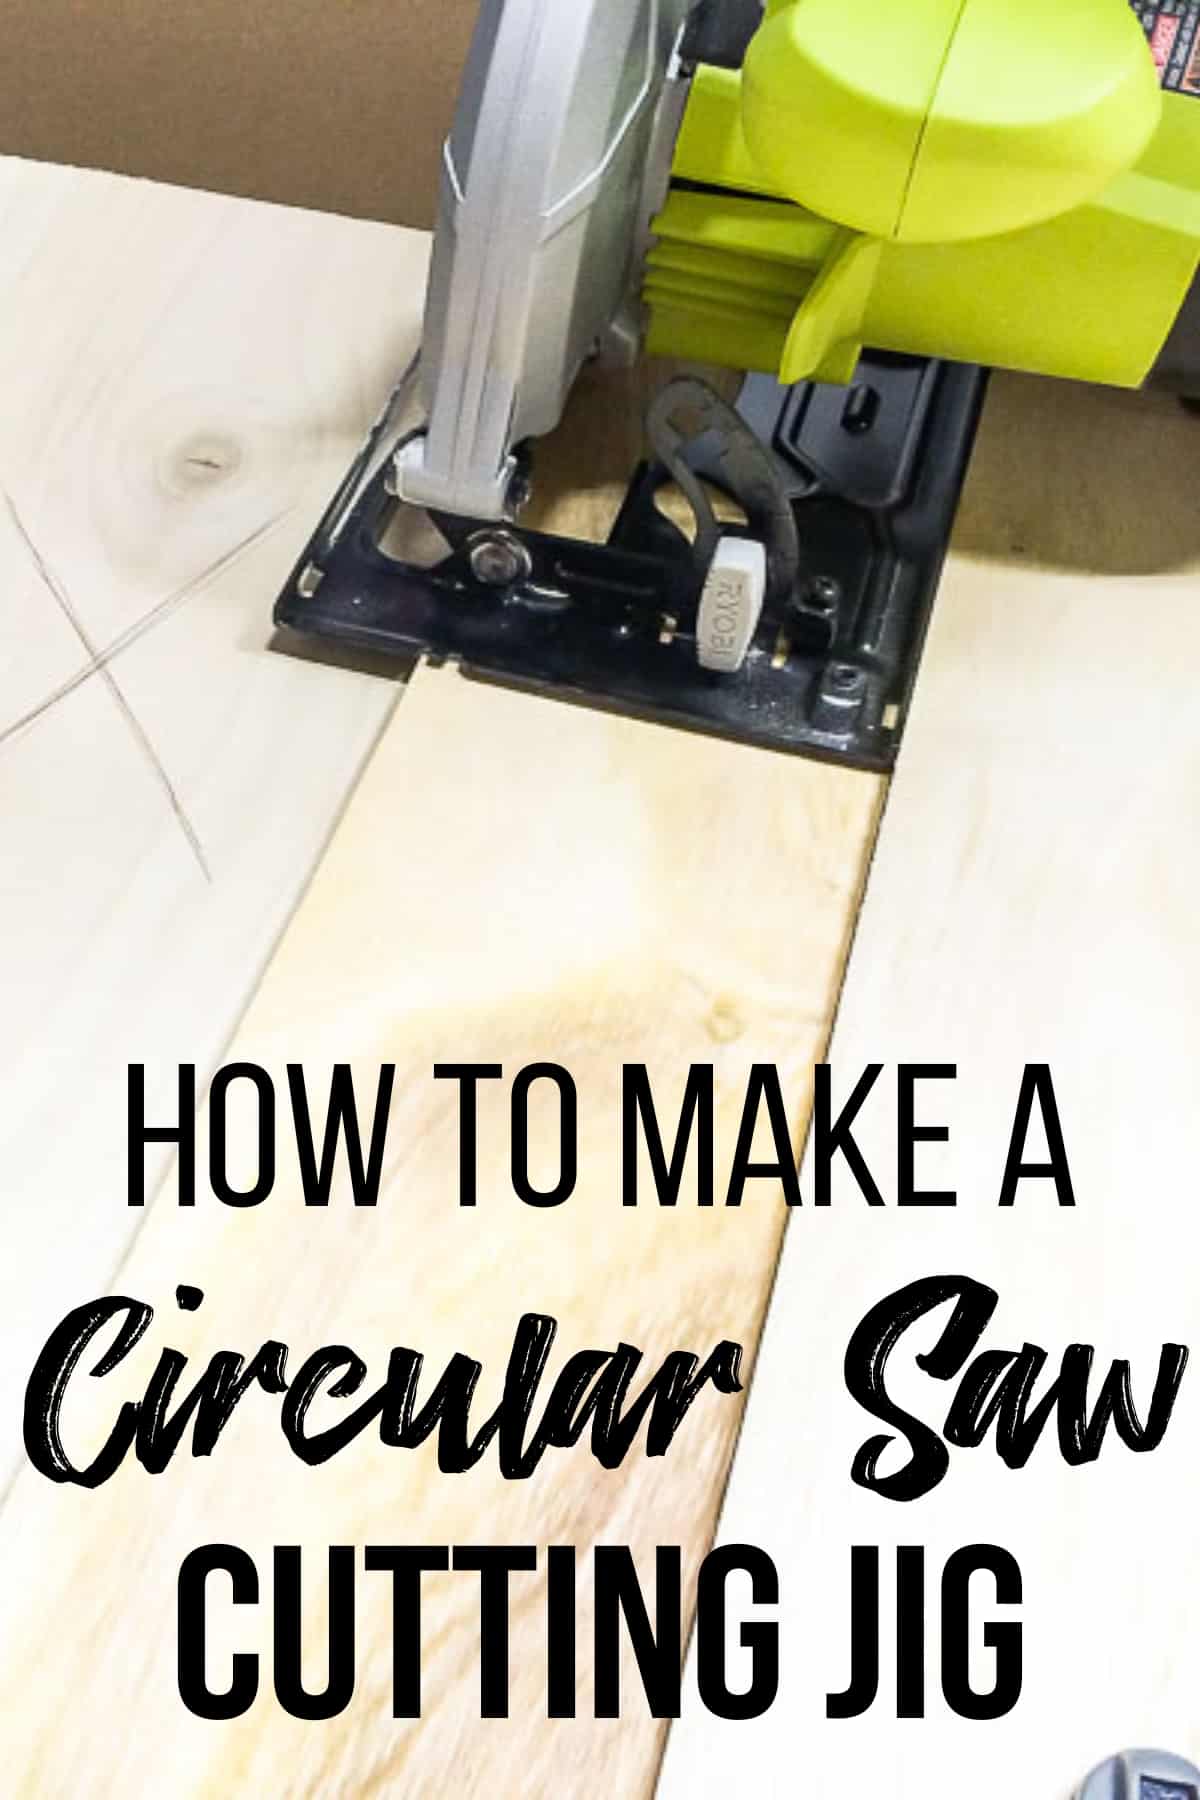 how to make a circular saw cutting jig